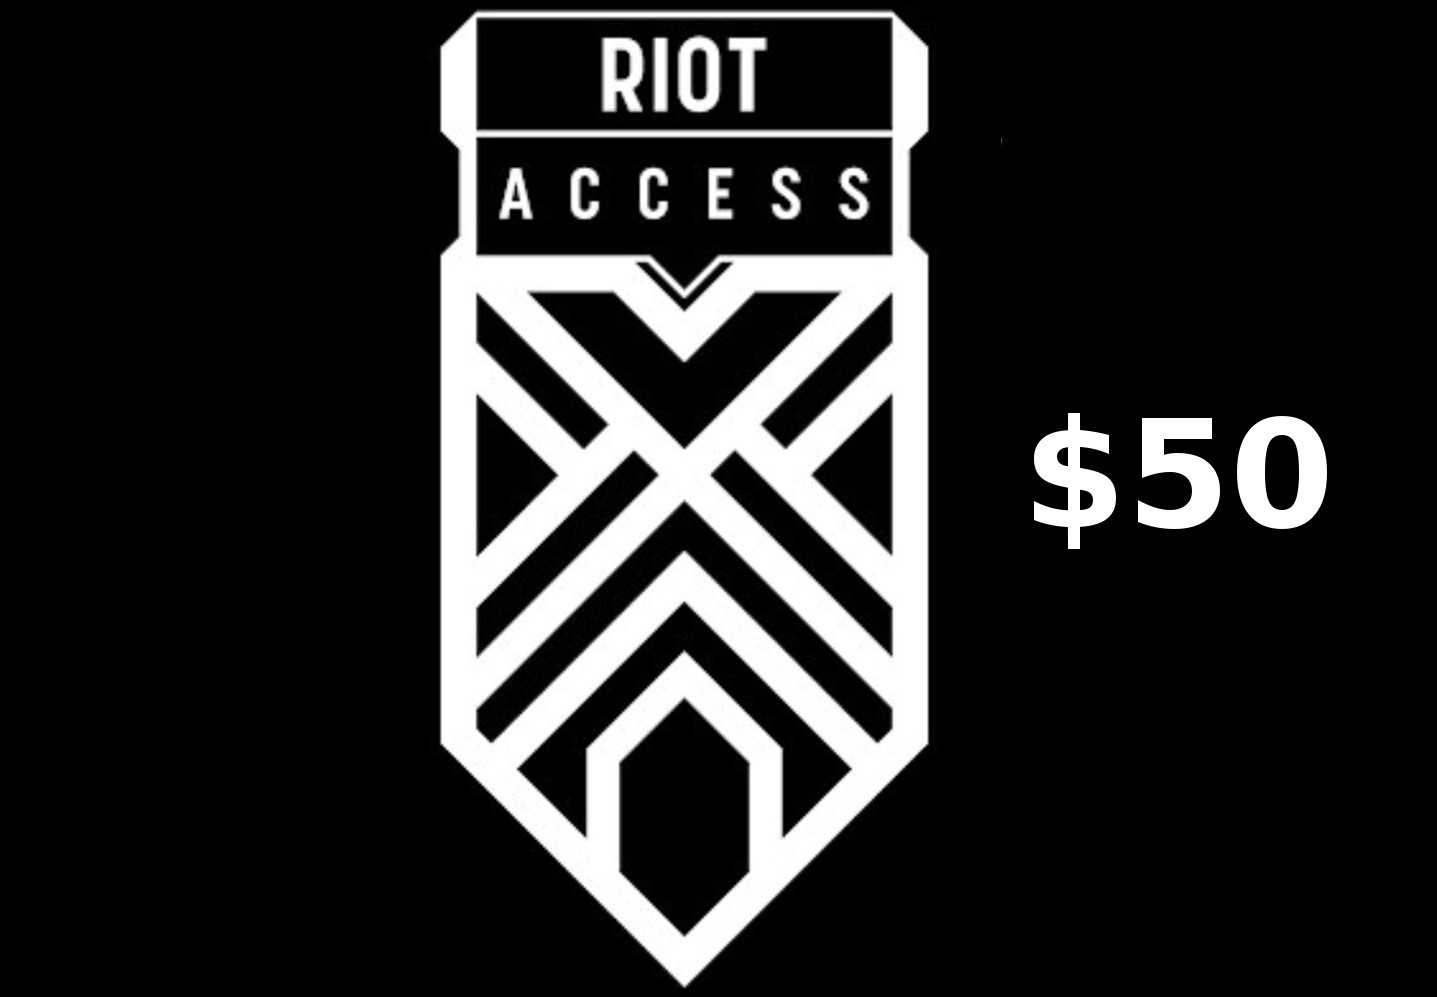 Riot Access $50 Code US